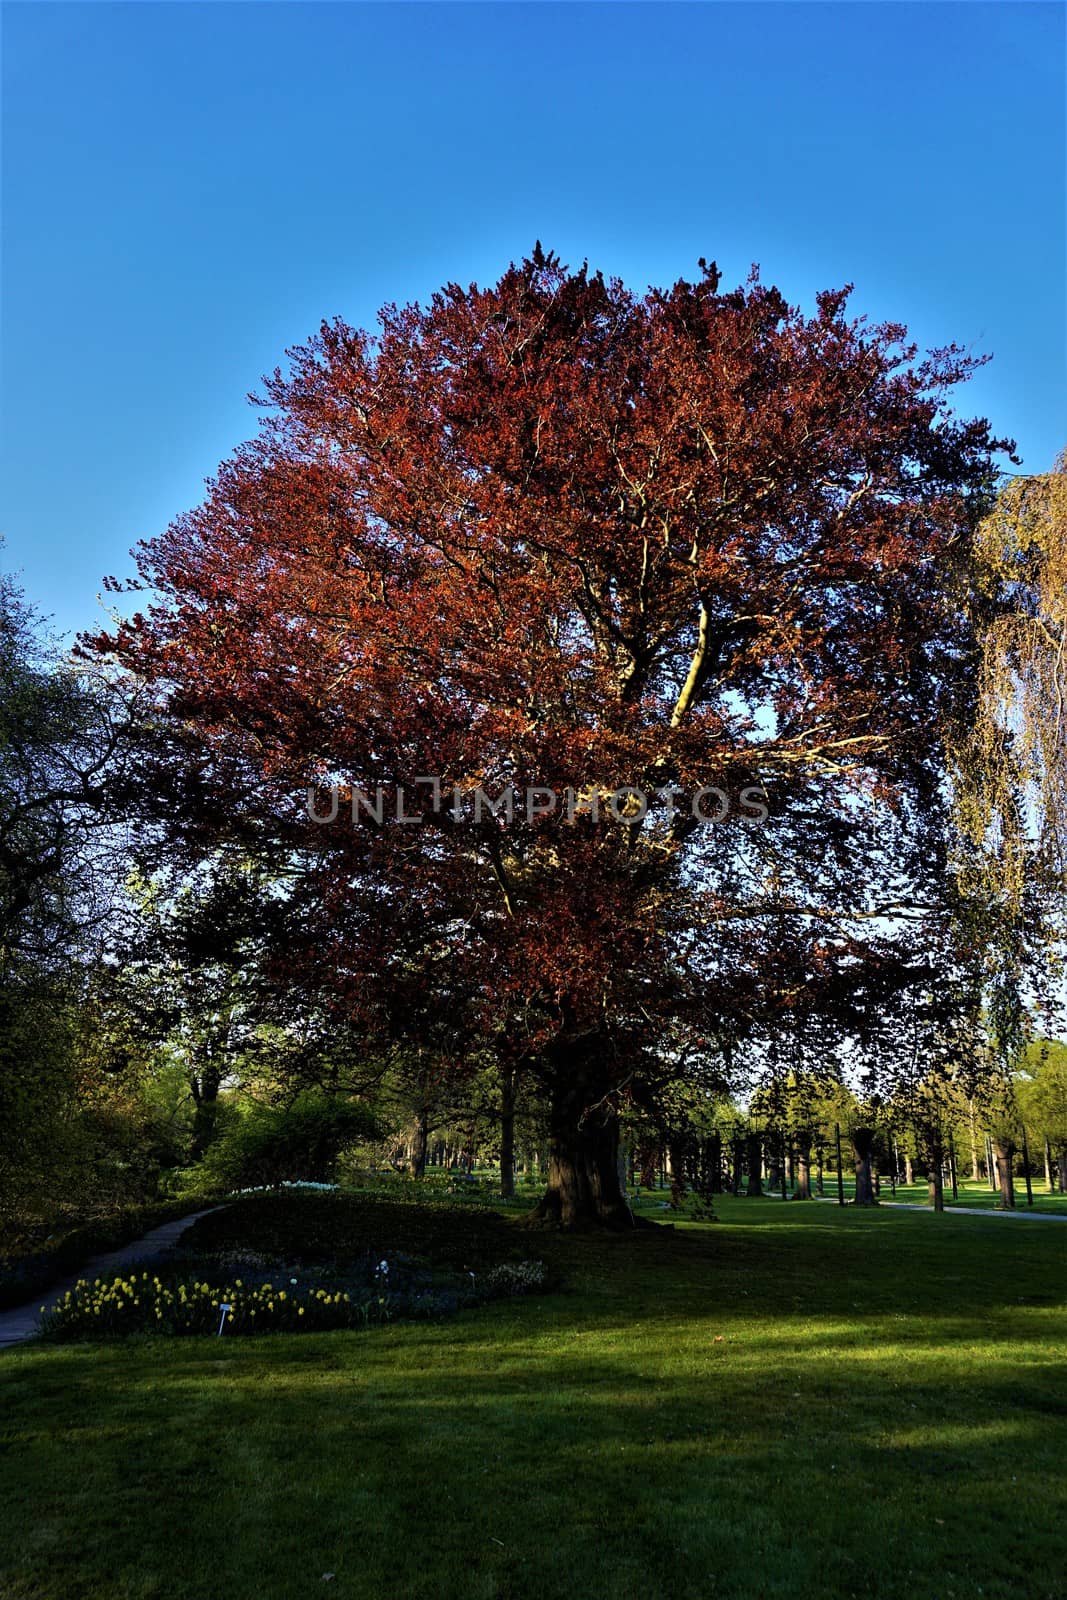 Impressive Fagus sylvatica f. purpurea tree spotted in a park